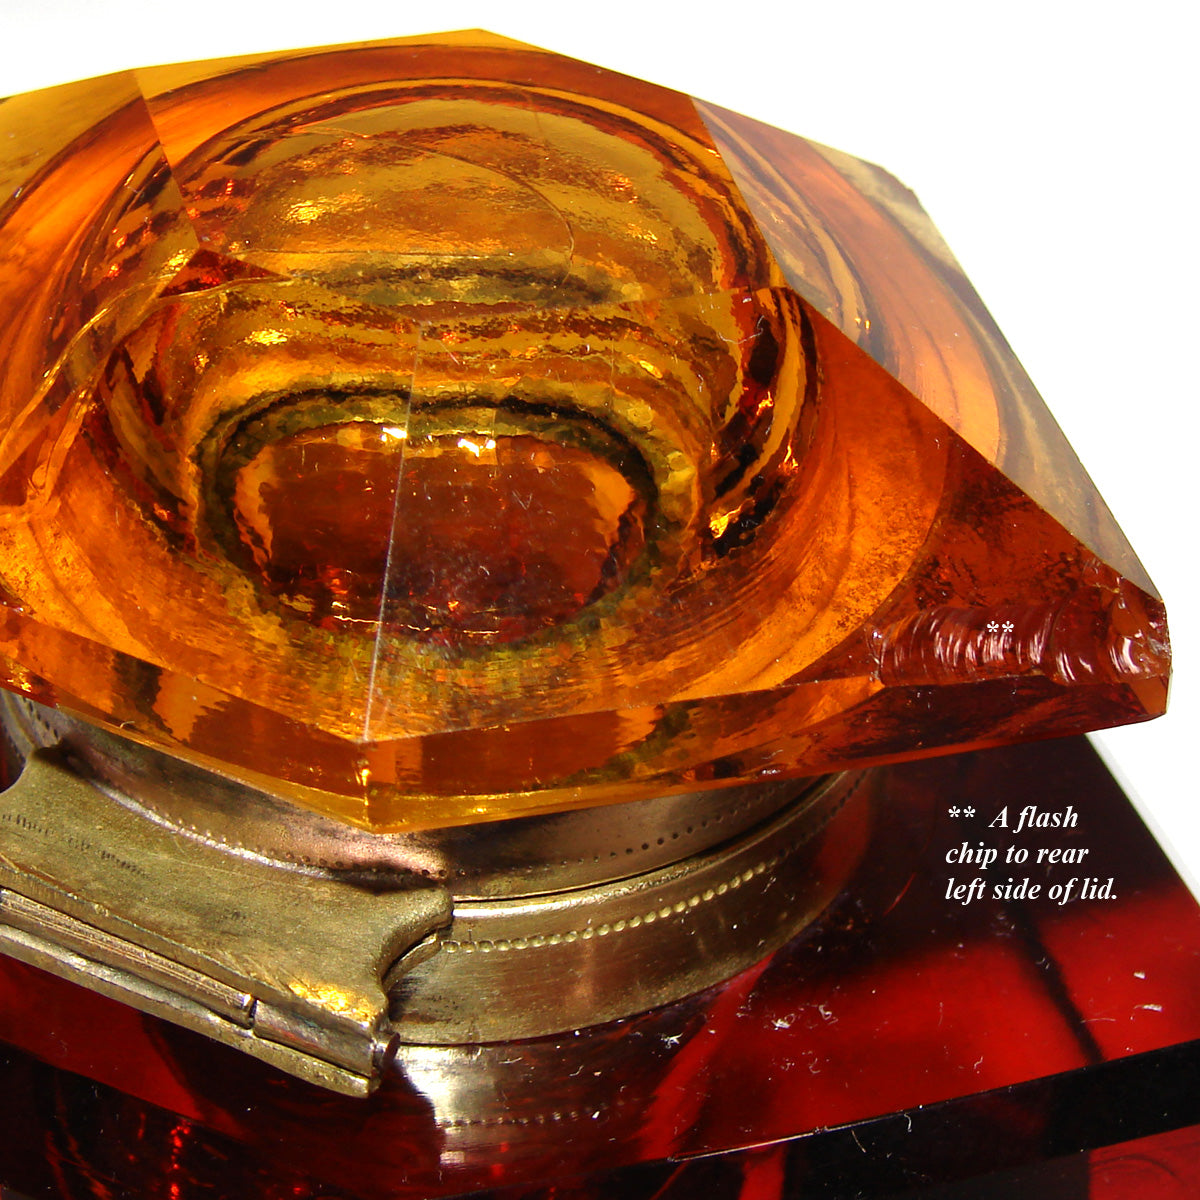 Lg Antique Victorian to Edwardian Era Amber Glass Desk Top Inkwell, Diamond Shape, Wheel Cut